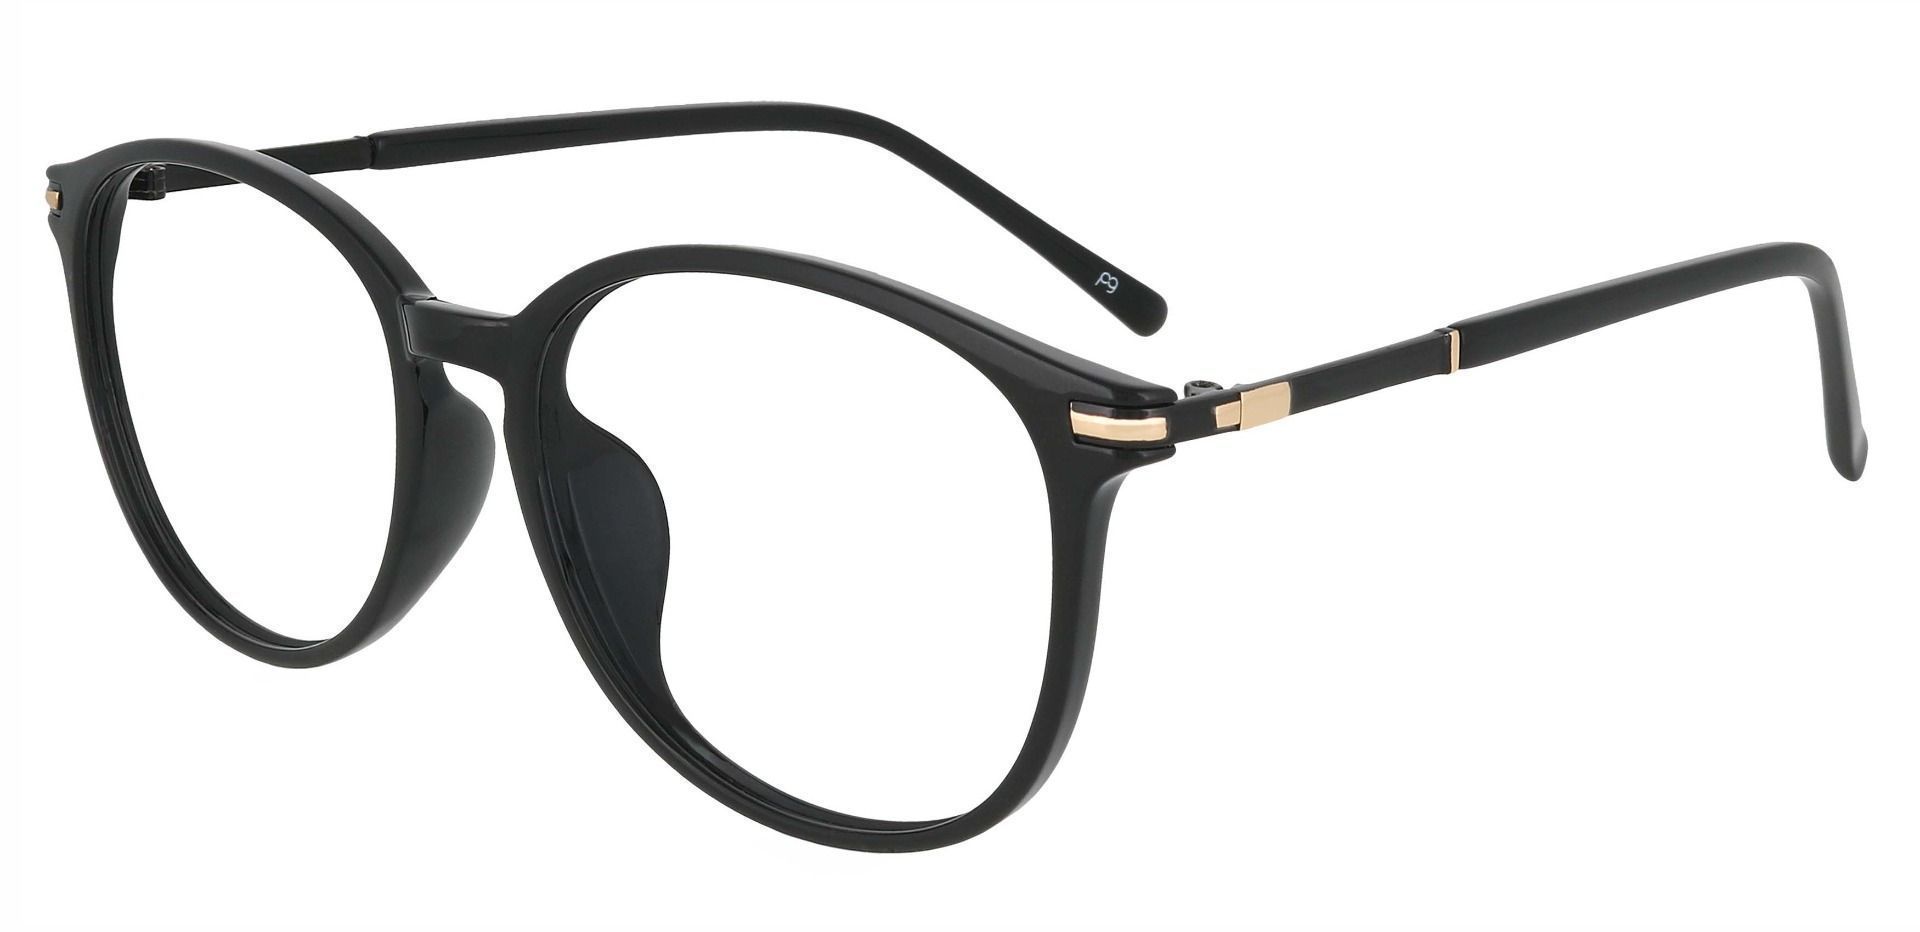 Rainier Oval Progressive Glasses - Black